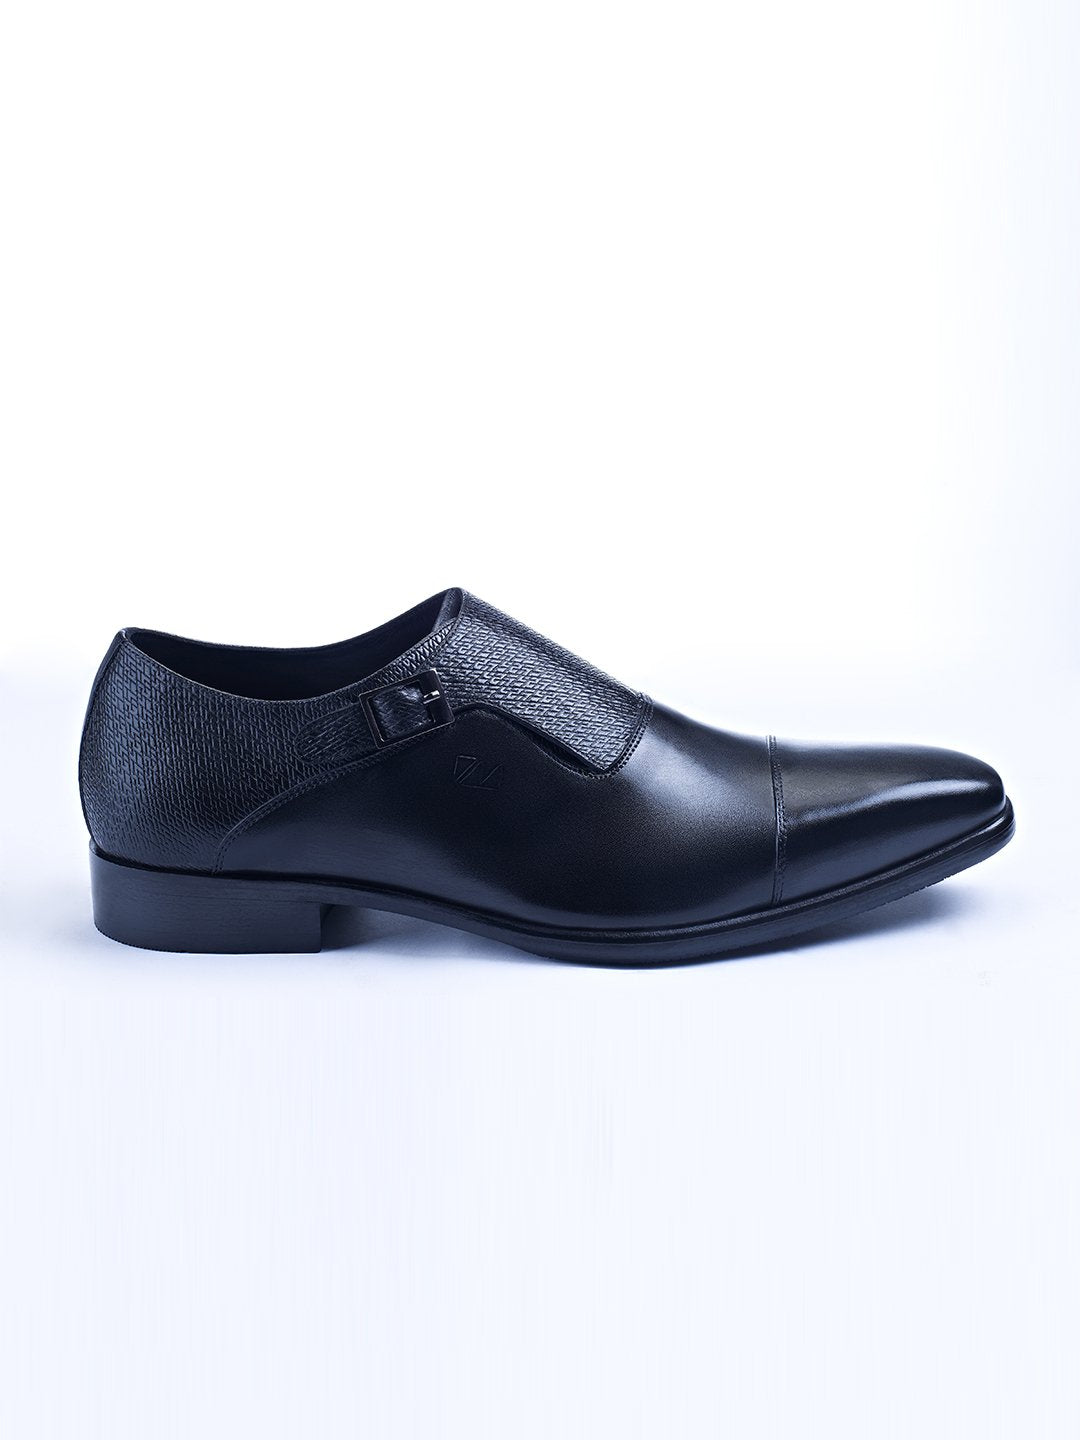 Single Buckle Monk Shoes With Zm Embossed Detail (Black) - Zest Mélange 